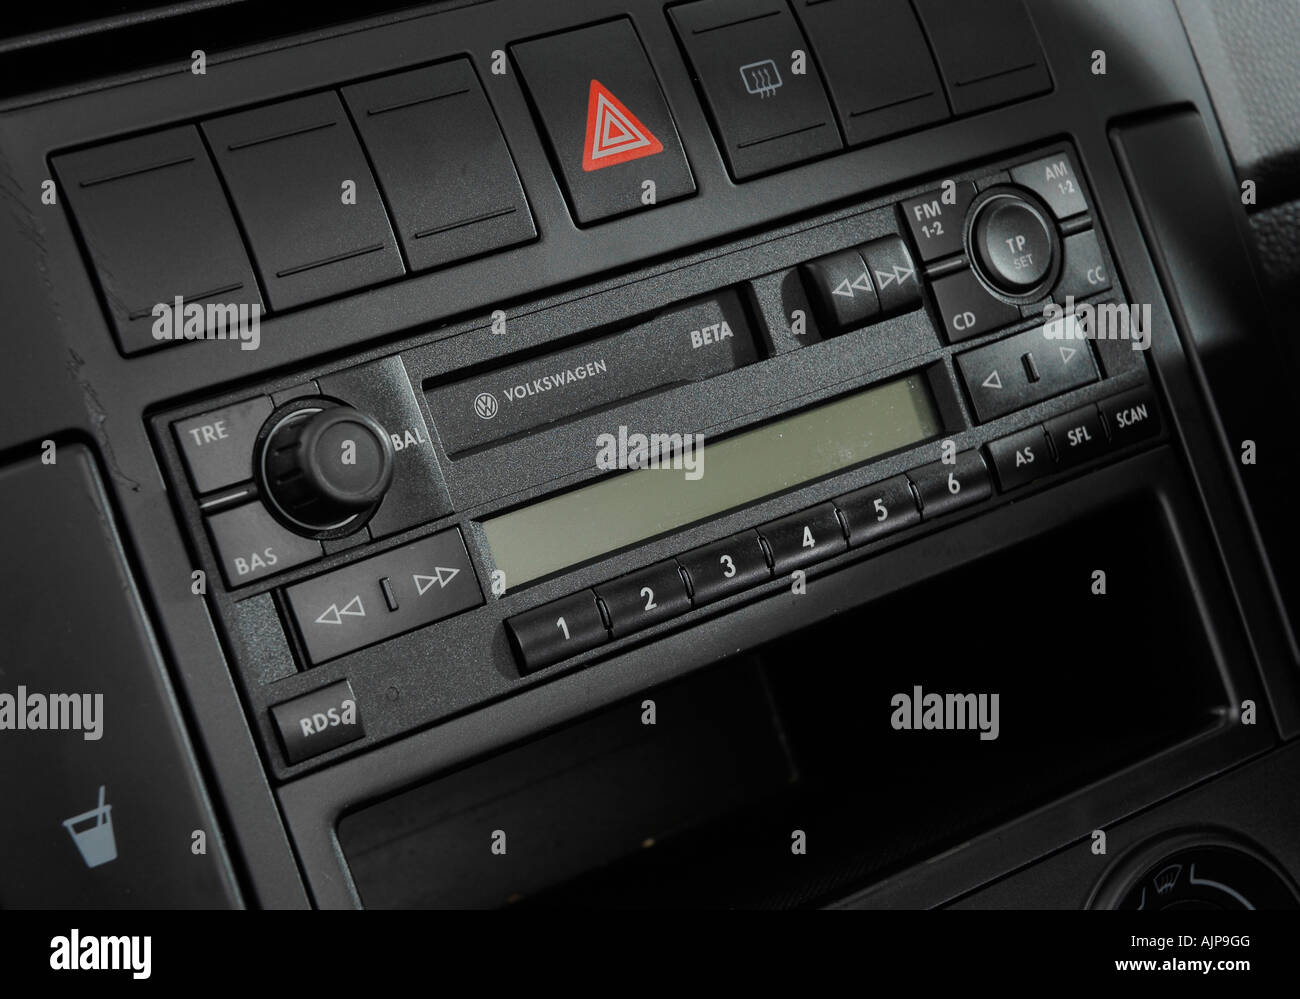 2003 Volkswagen Polo sdi radio Stock Photo - Alamy